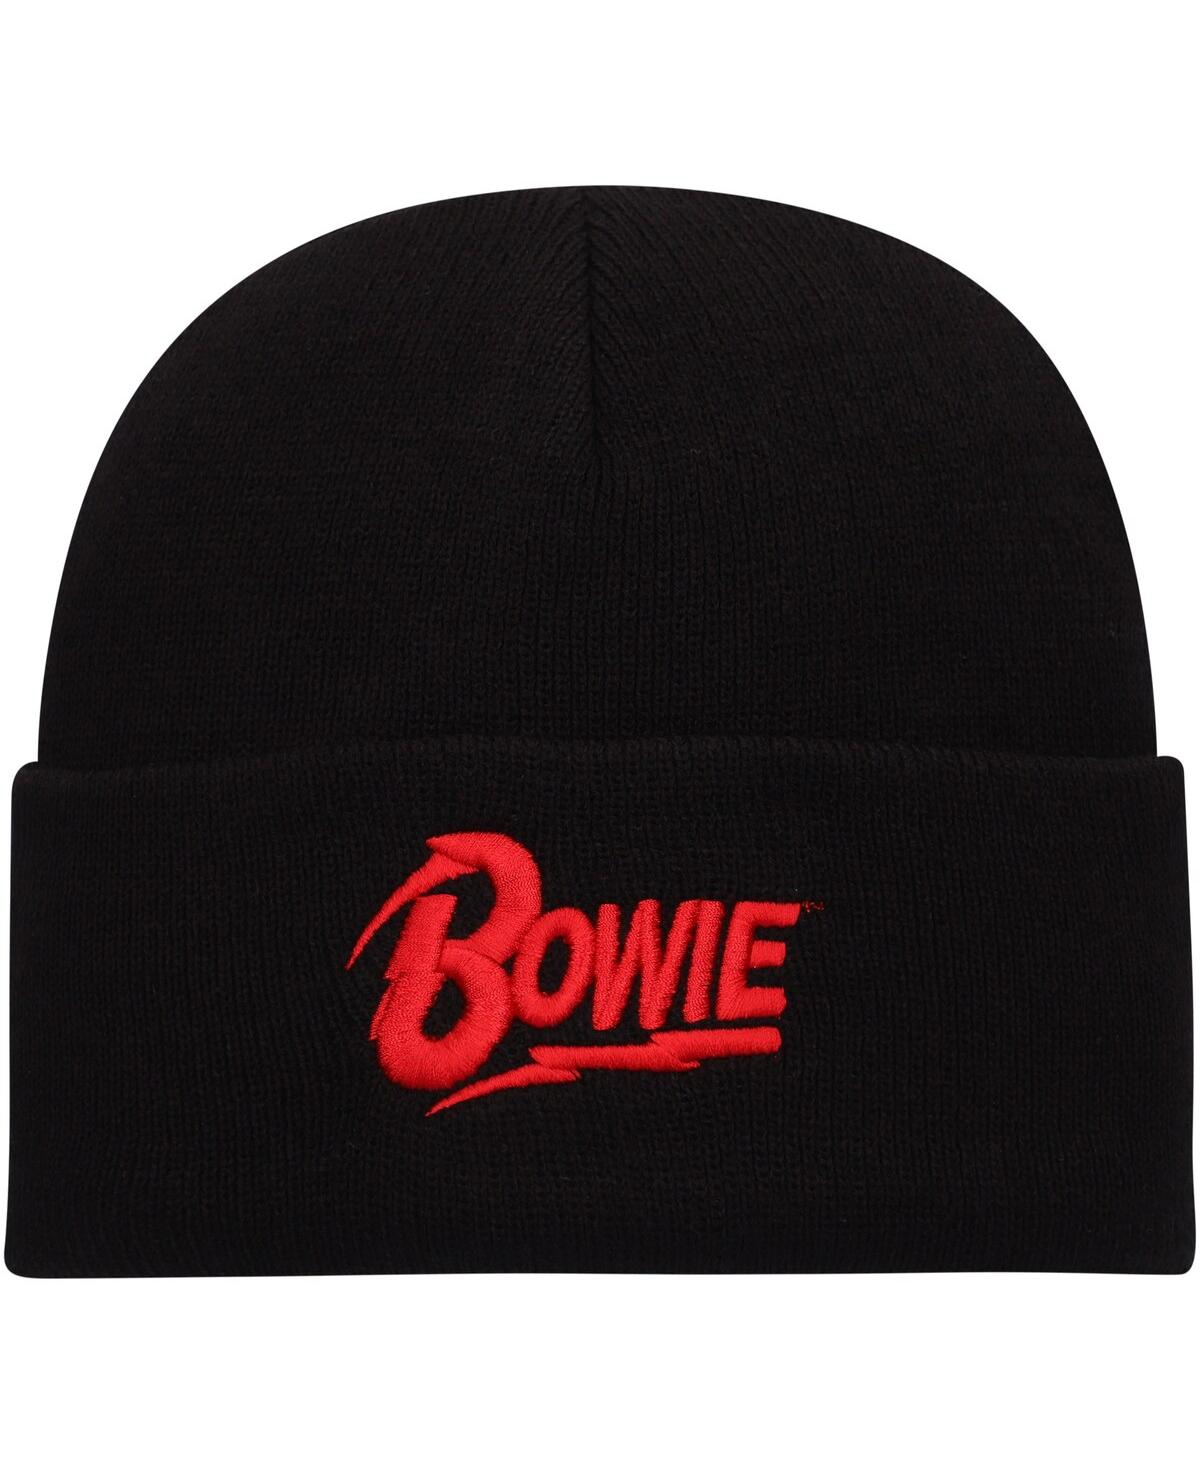 Men's American Needle Black David Bowie Cuffed Knit Hat - Black